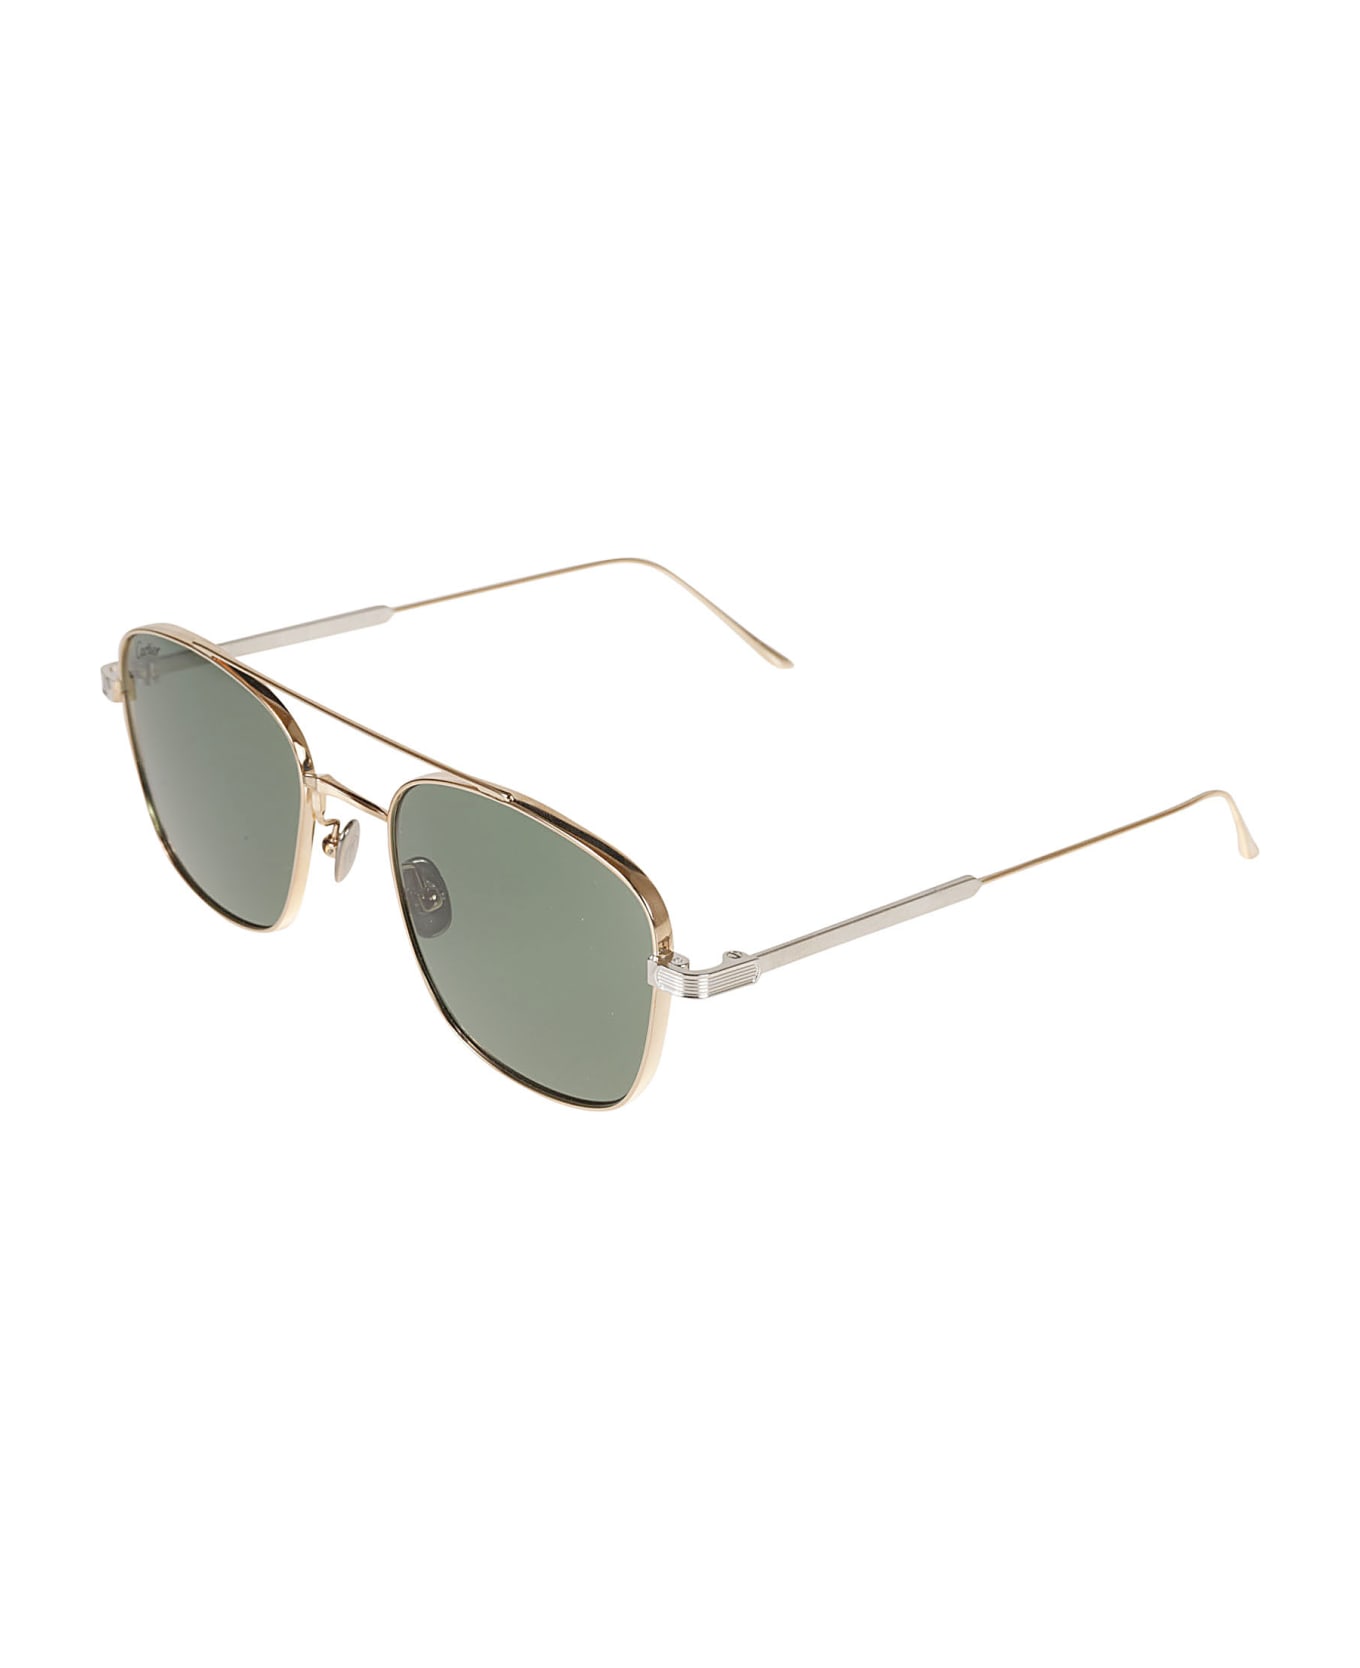 Cartier Eyewear Aviator Square Sunglasses - Silver/Green